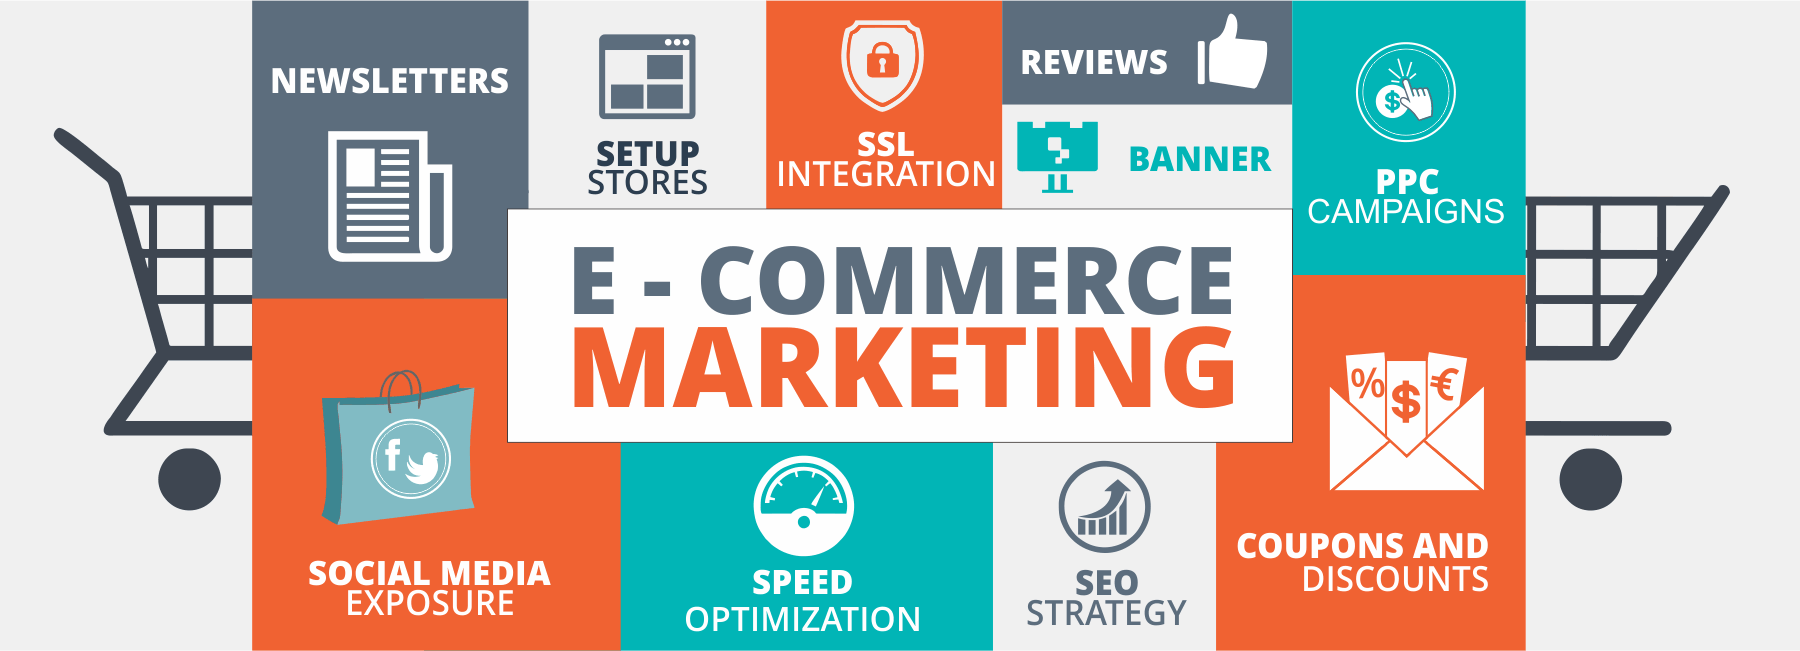 Digital marketing strategy for e-commerce websites